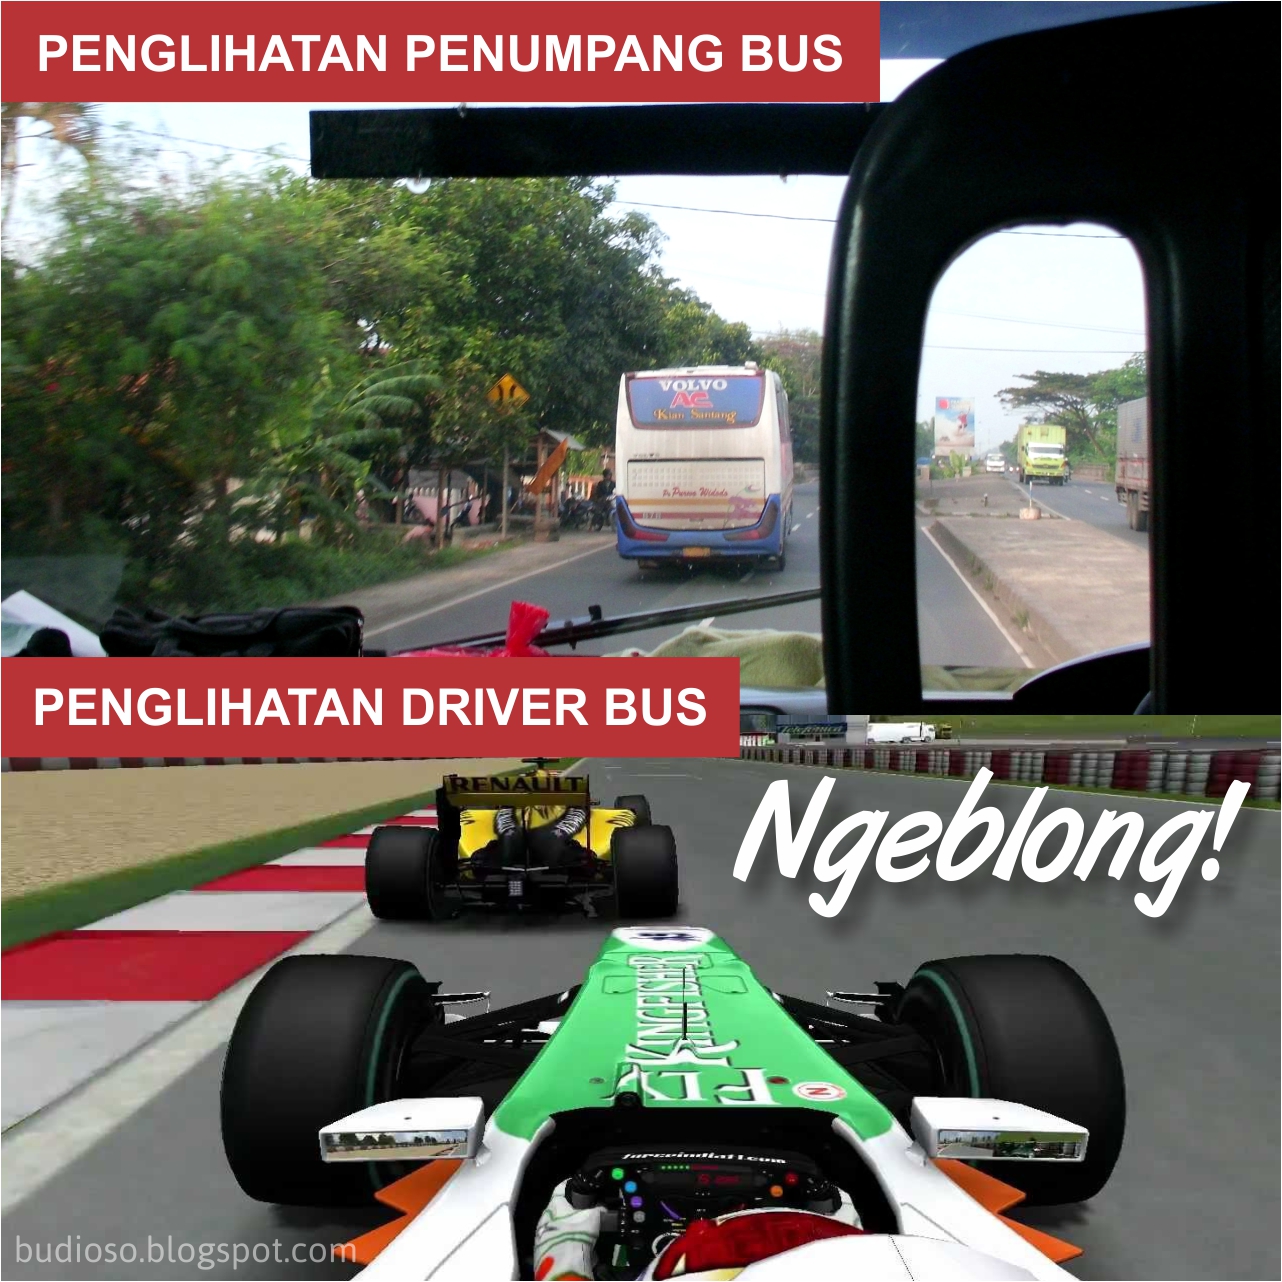 Meme Gambar Bis Ngeblong Foto Bus Ngeblong Budioso Blog